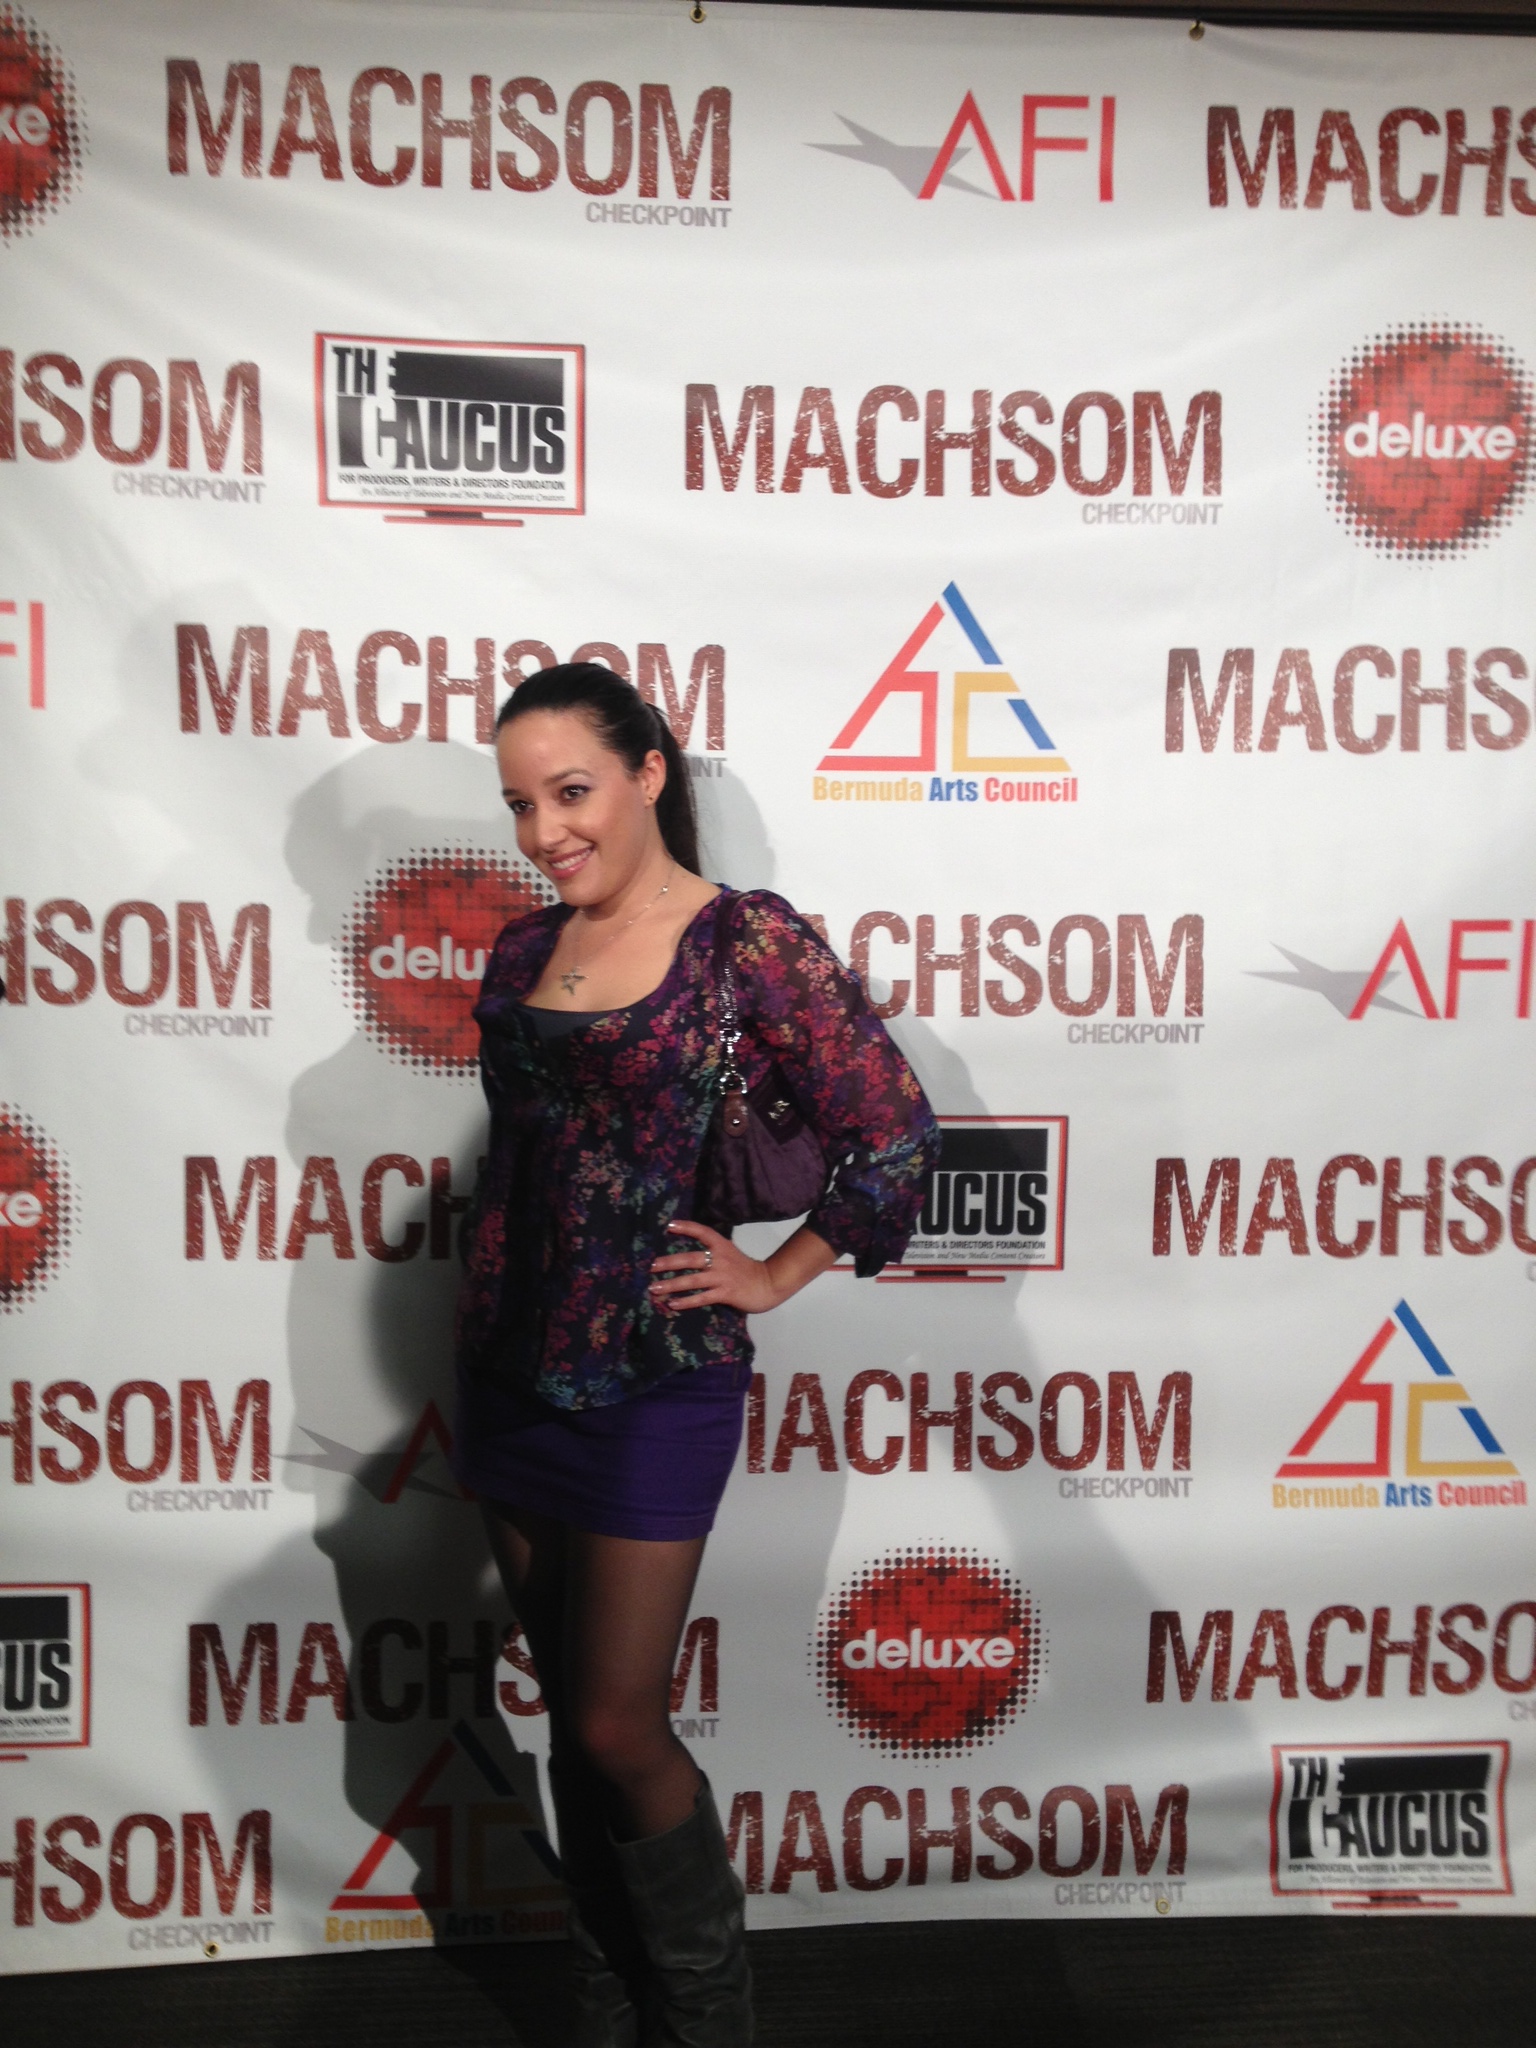 Machsom Premiere, AFI